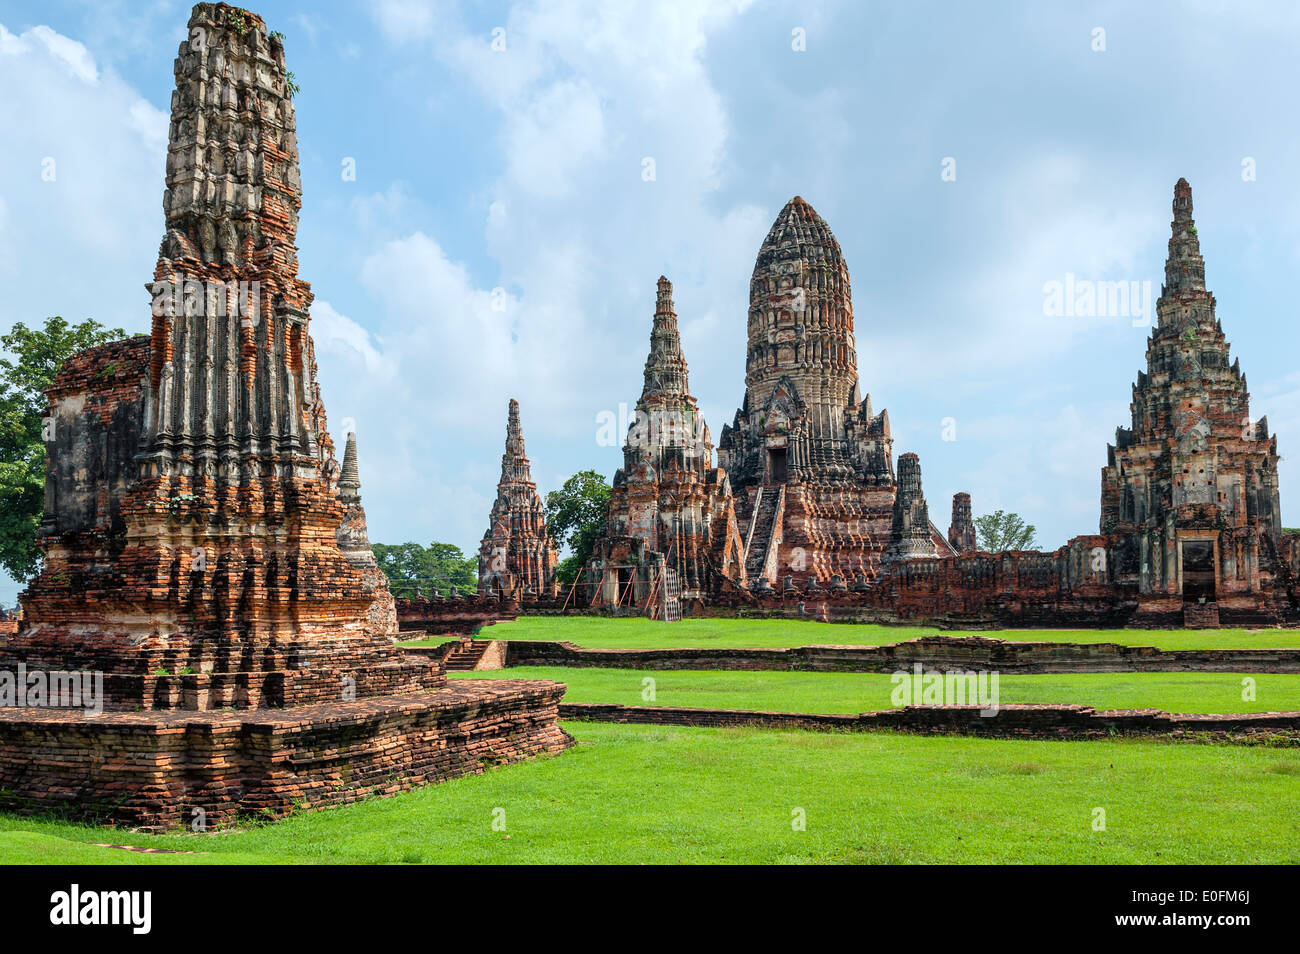 Wat Chaiwatthanaram temple, Ayutthaya, Thailand, Unesco World Heritage Site Stock Photo